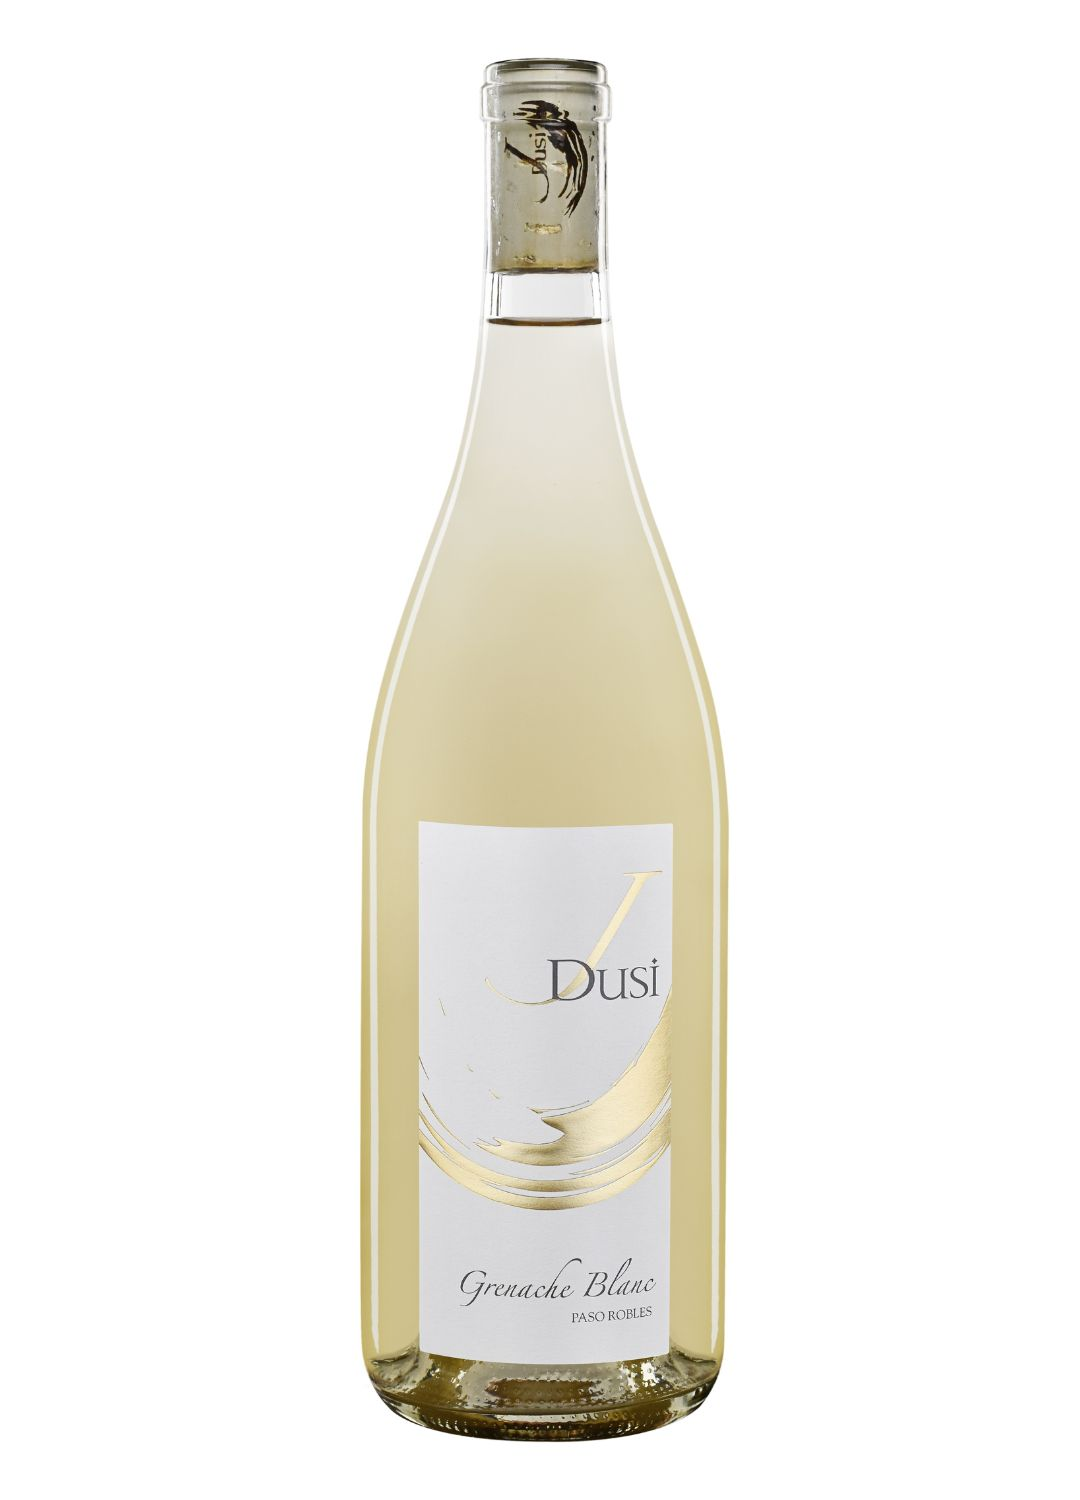 Bottle of Grenache Blanc from J Dusi Wines